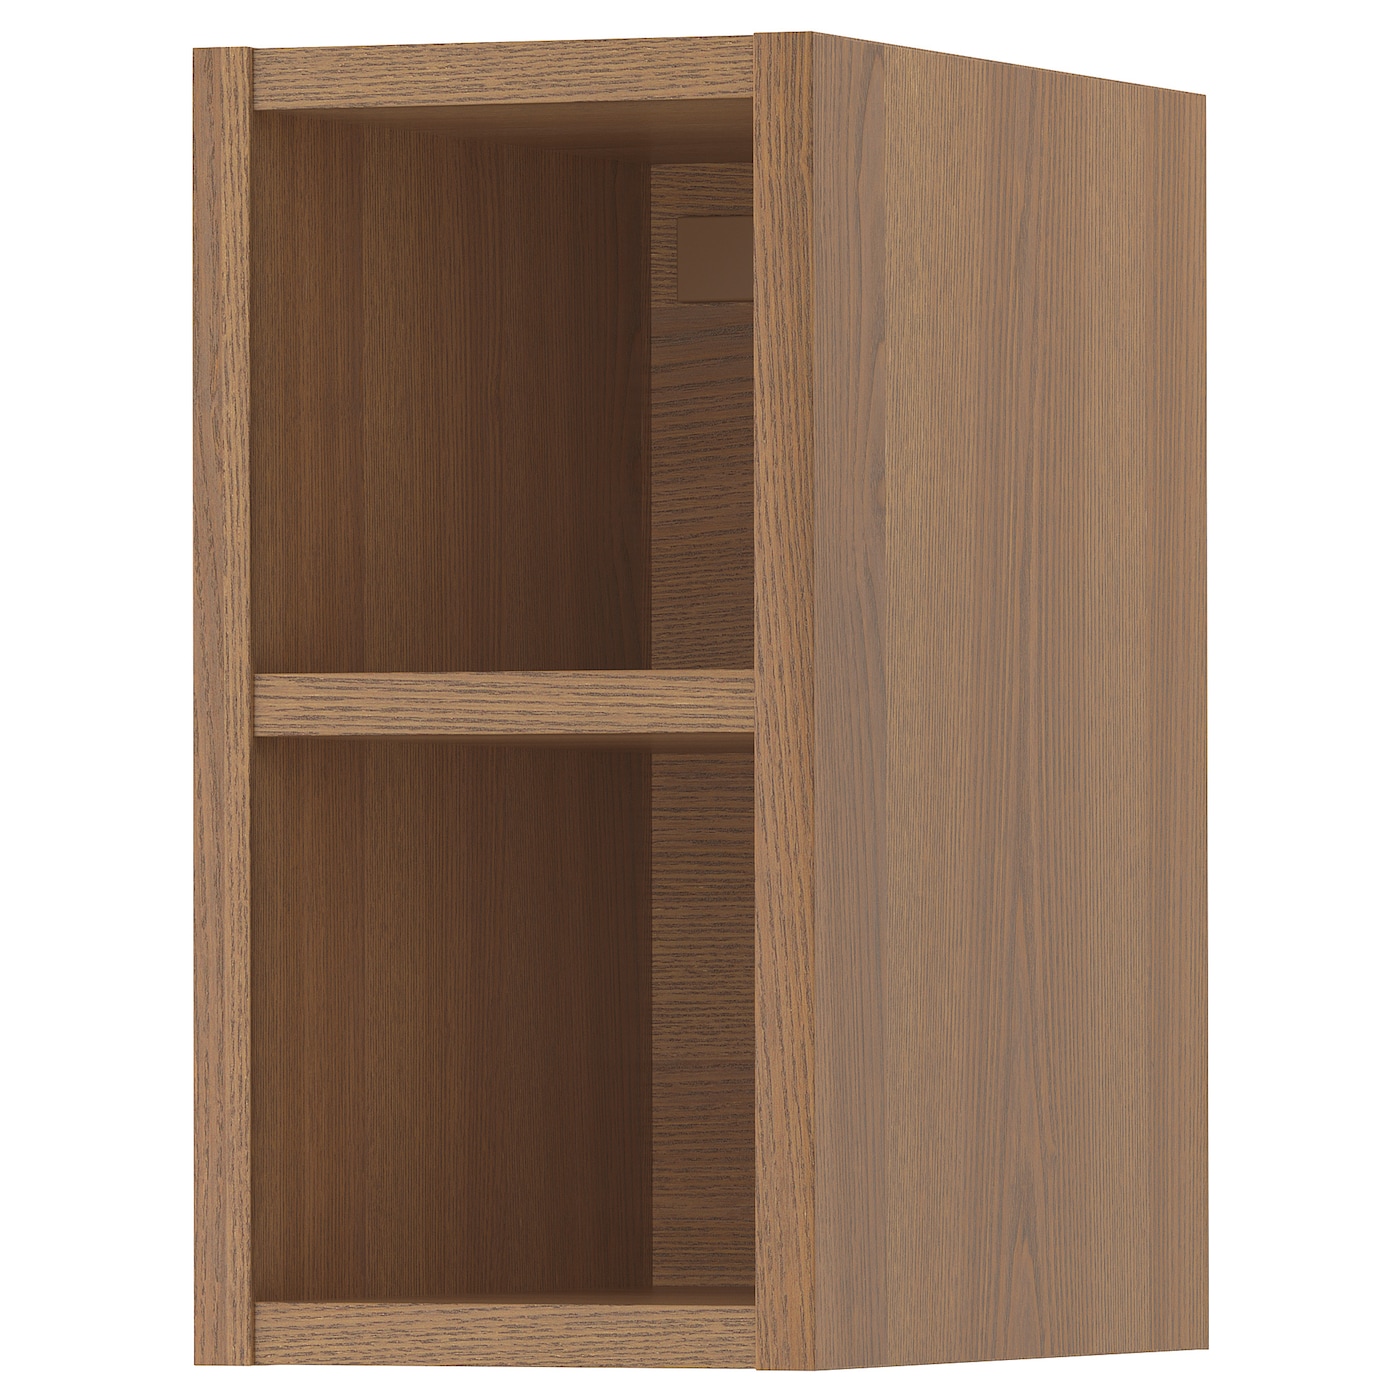 Шкаф - VADHOLMA IKEA/ ВАДХОЛЬМА ИКЕА,  40х20 см, коричневый